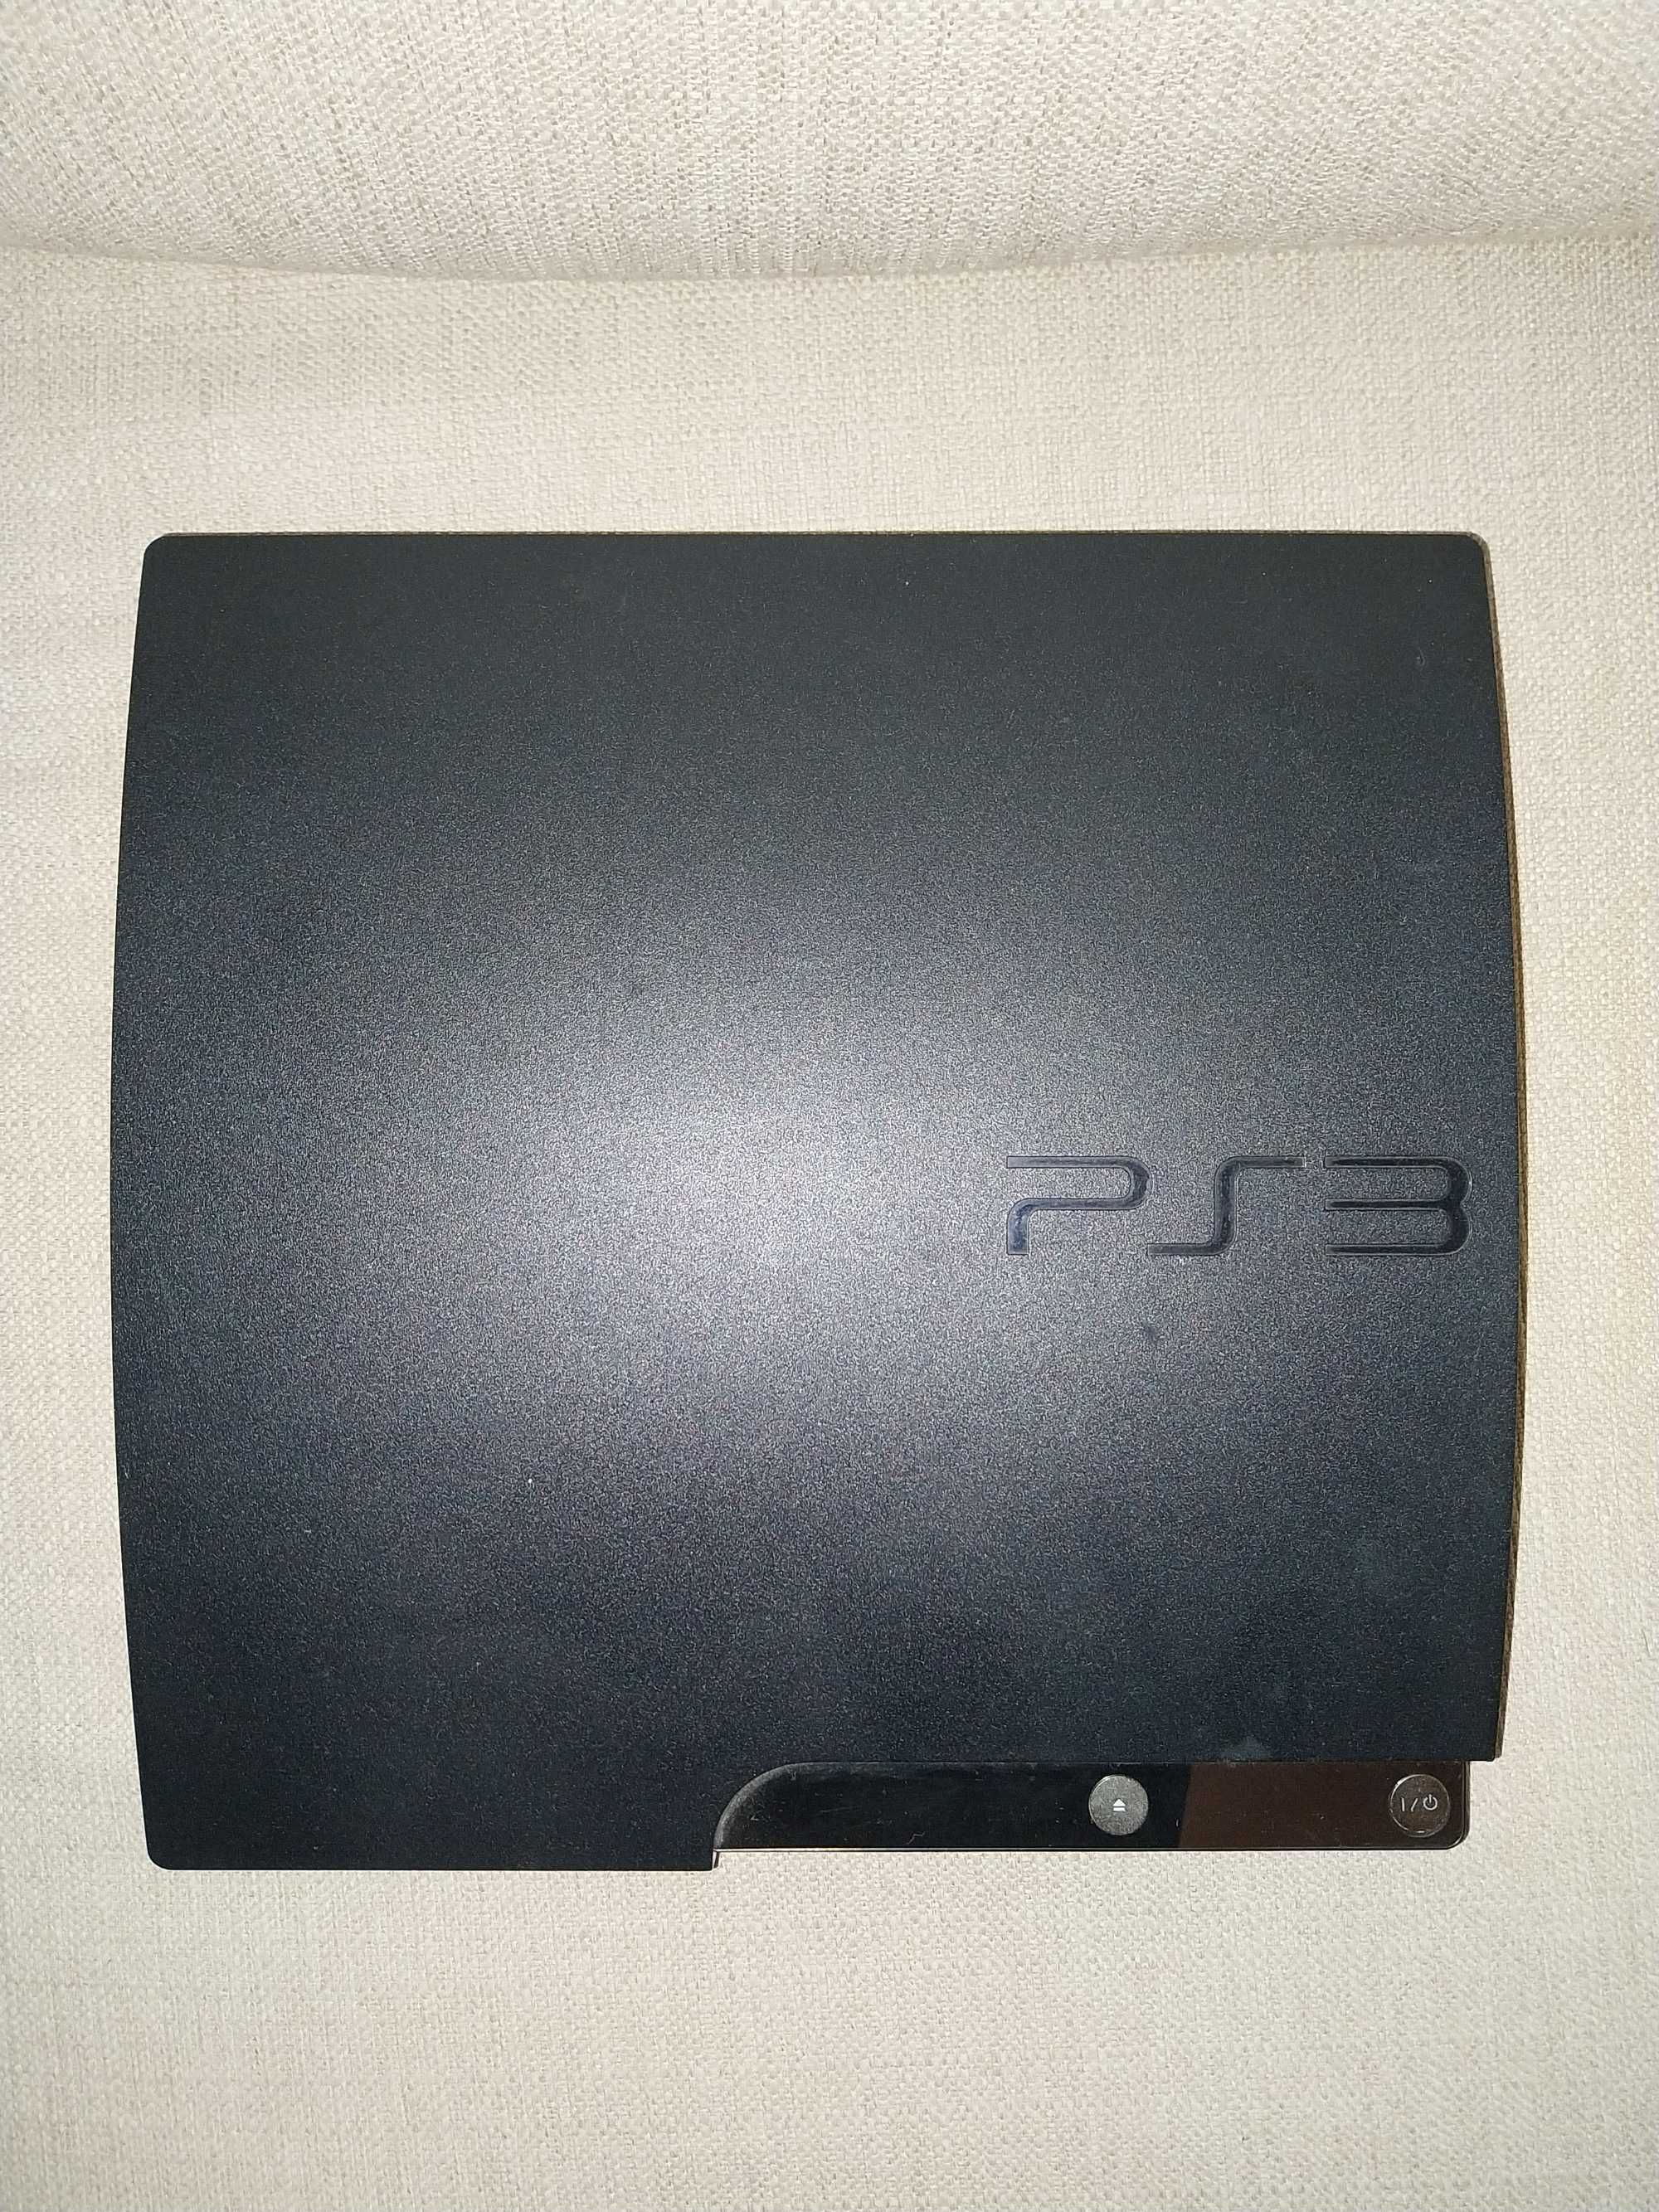 PlayStation 3 ( consola)